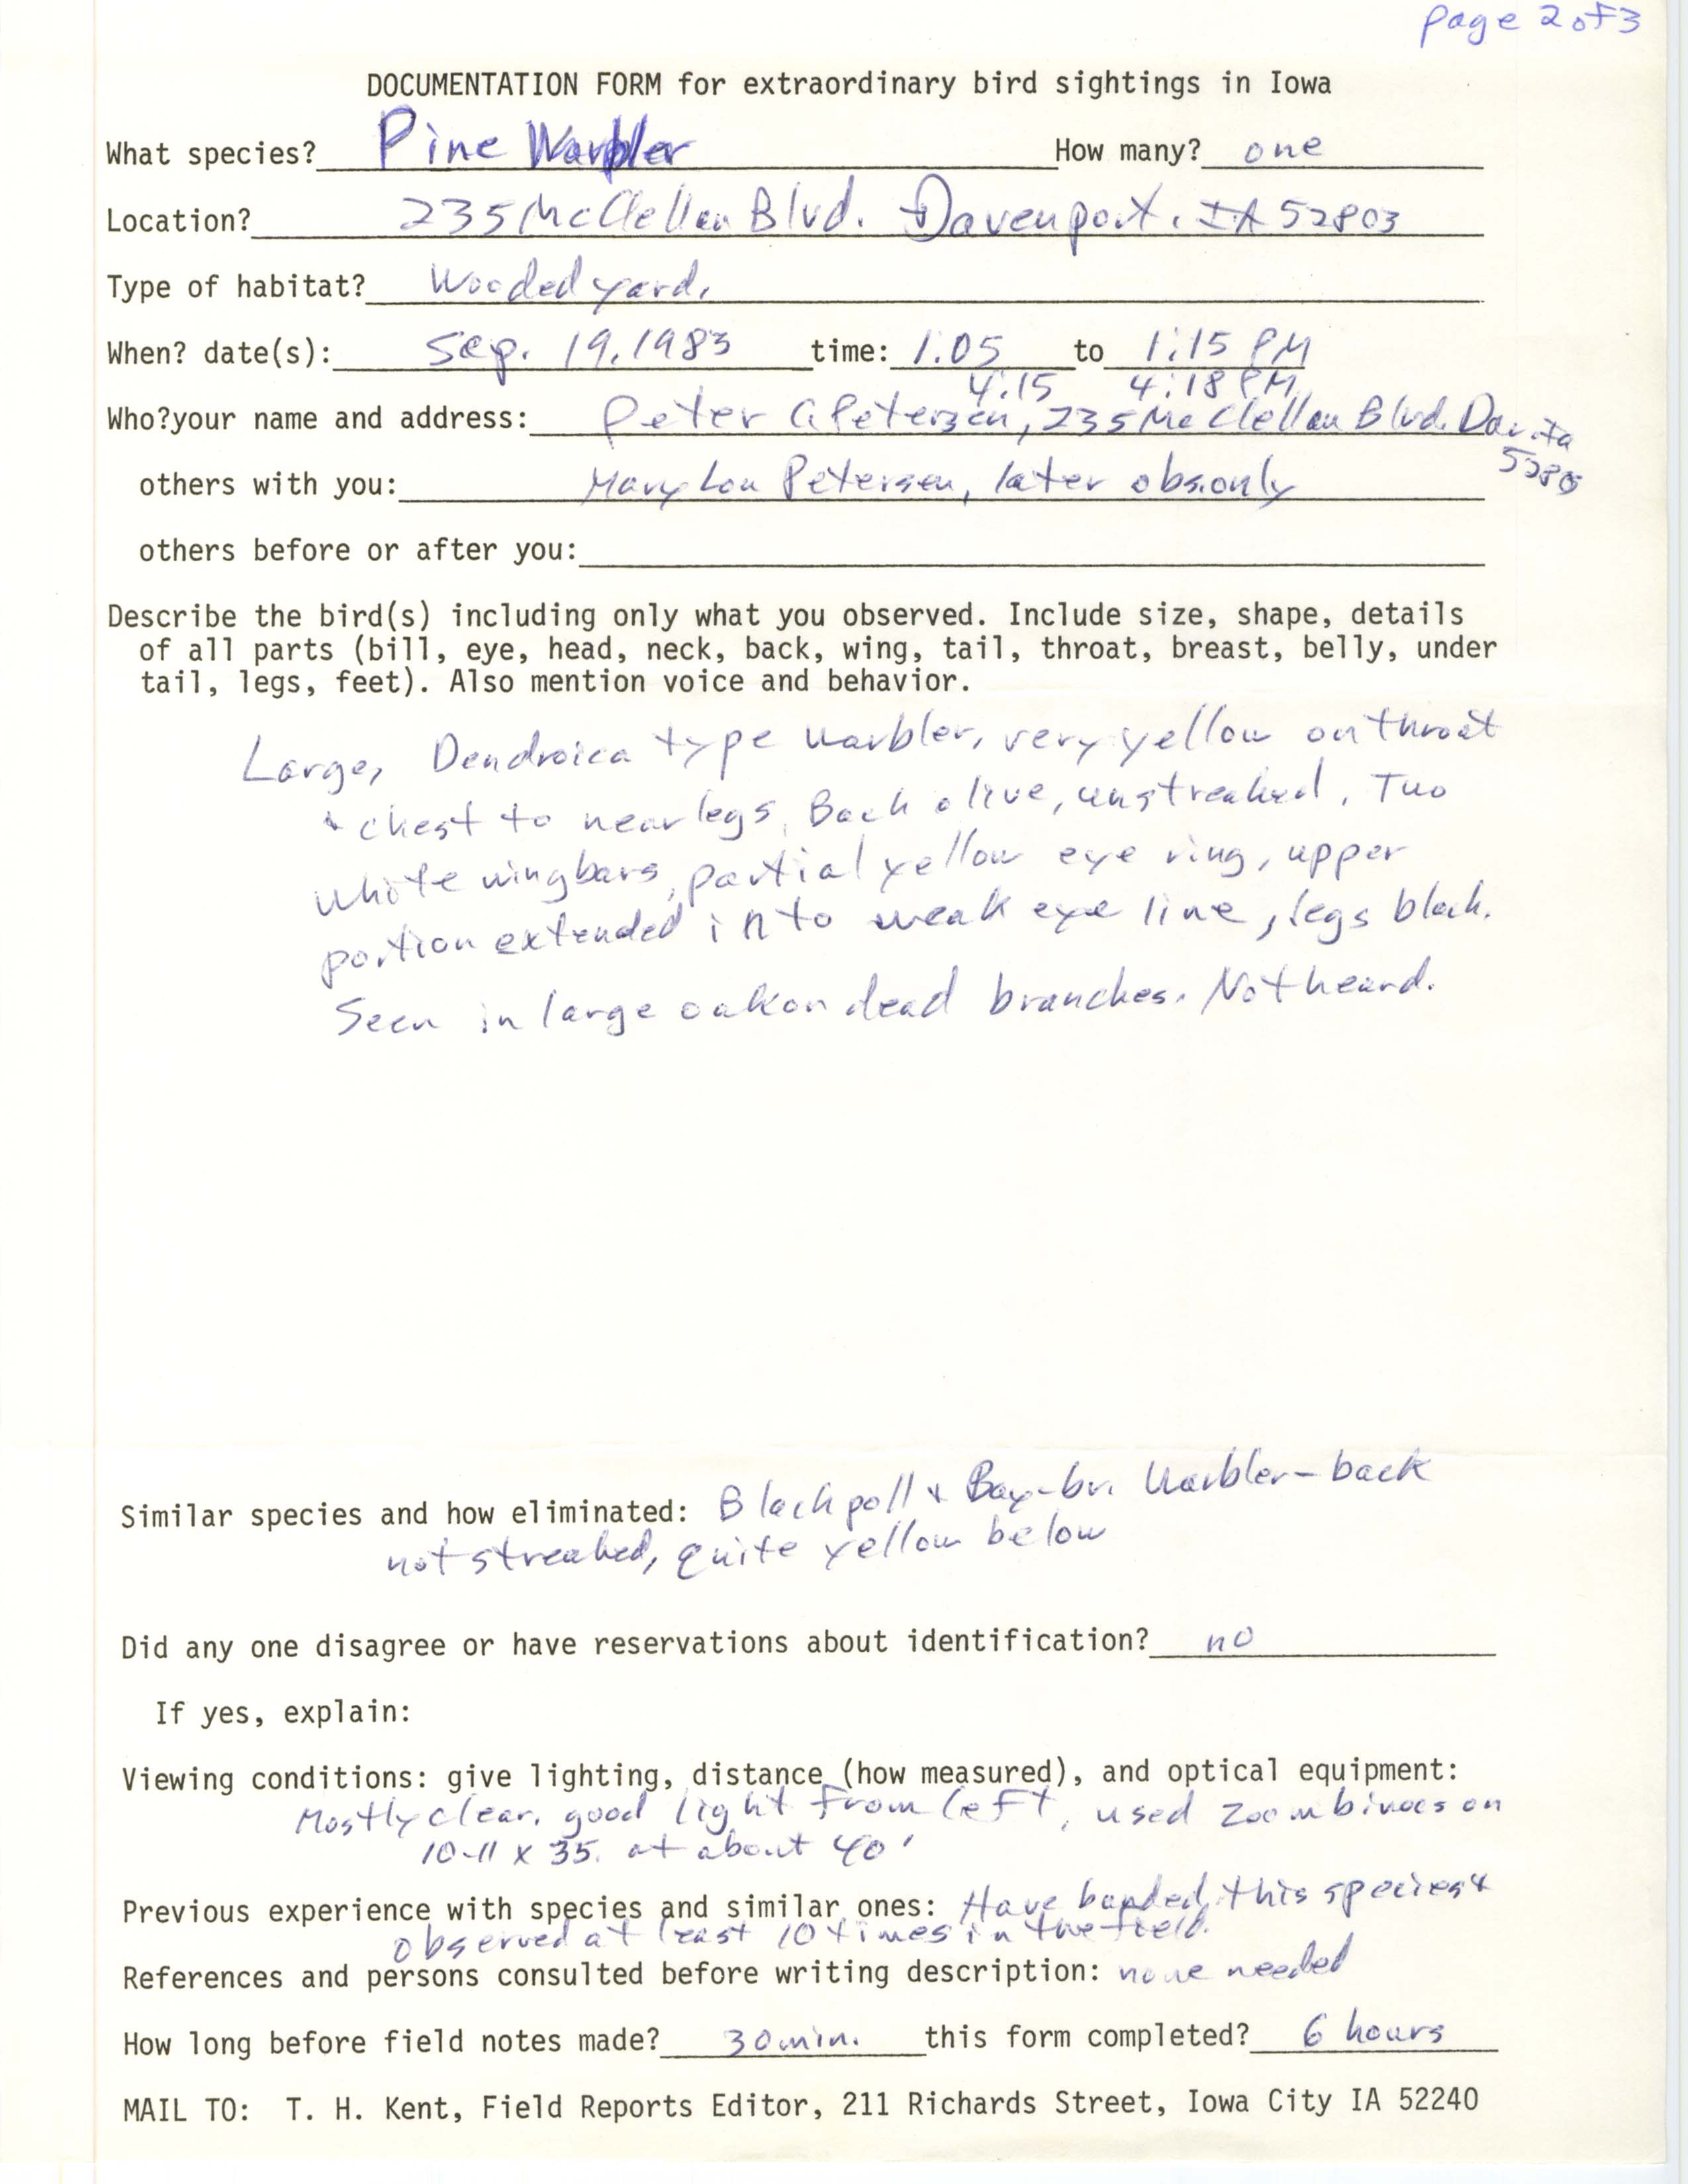 Rare bird documentation form for Pine Warbler at Davenport, 1983